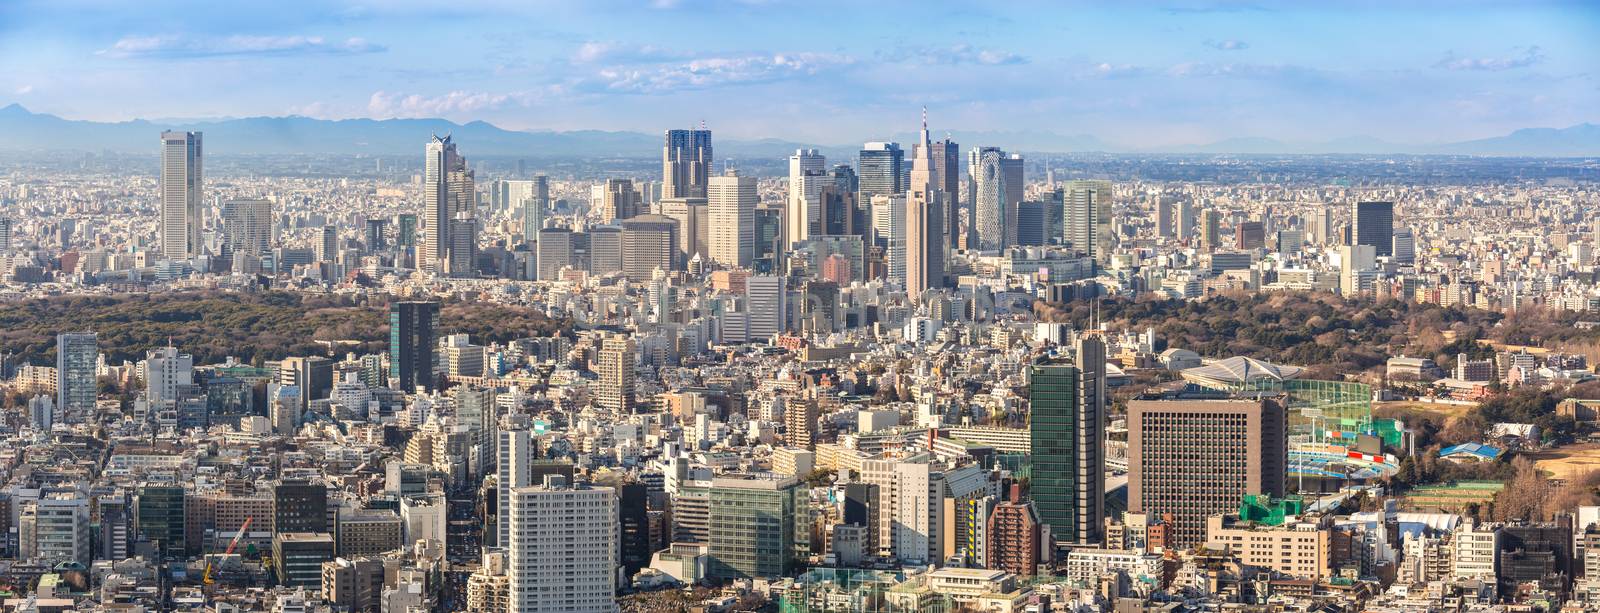 Tokyo city skyline in Shinjuku area panorama